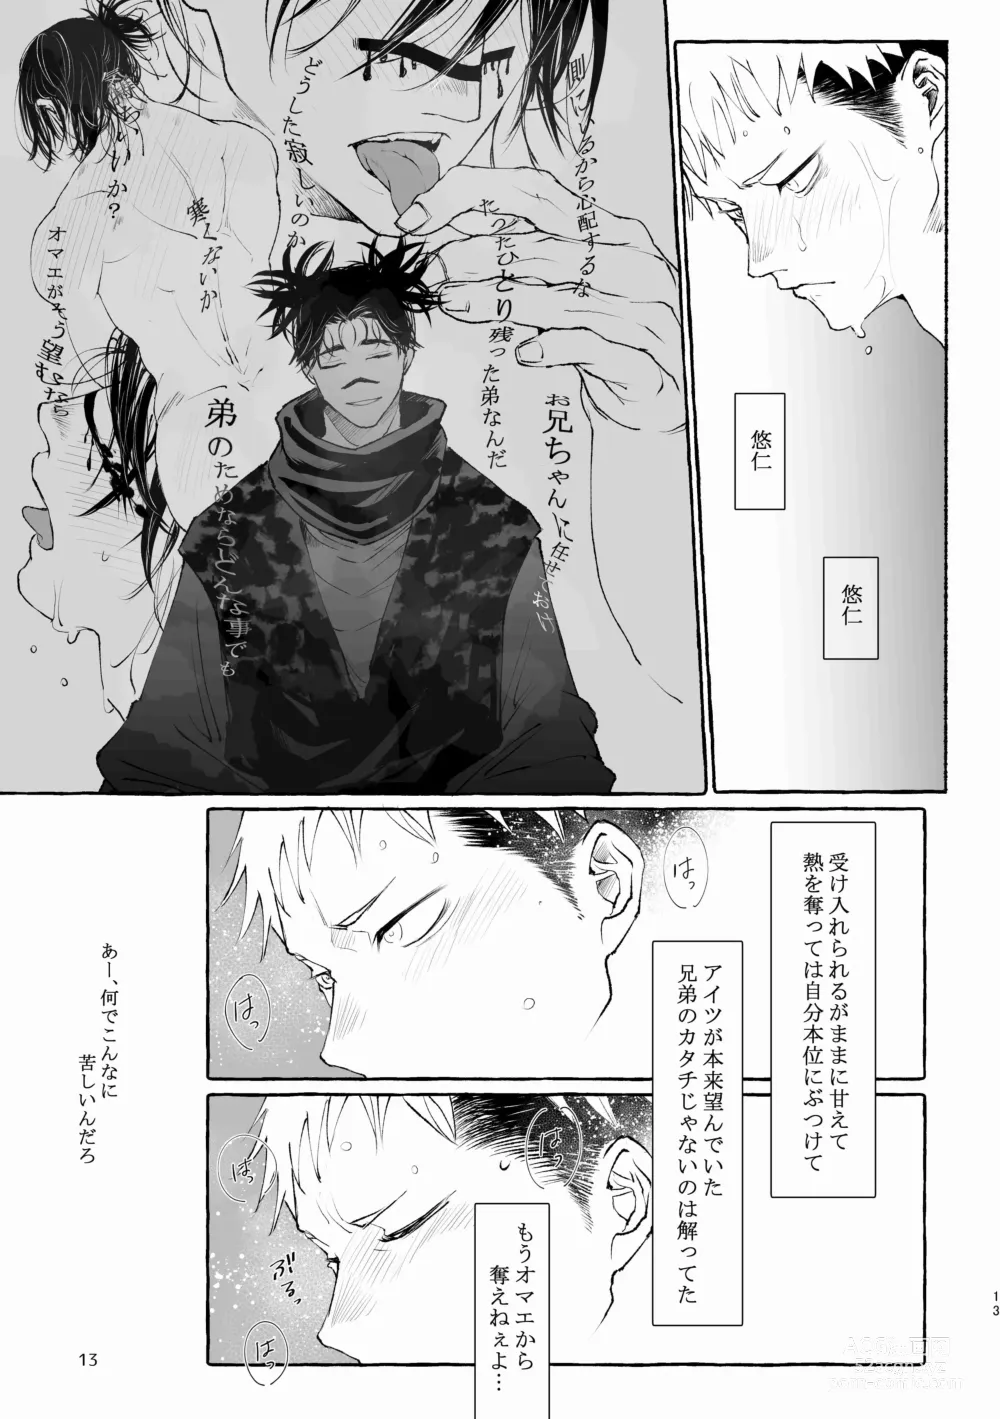 Page 13 of doujinshi Inryoku no Petrichor